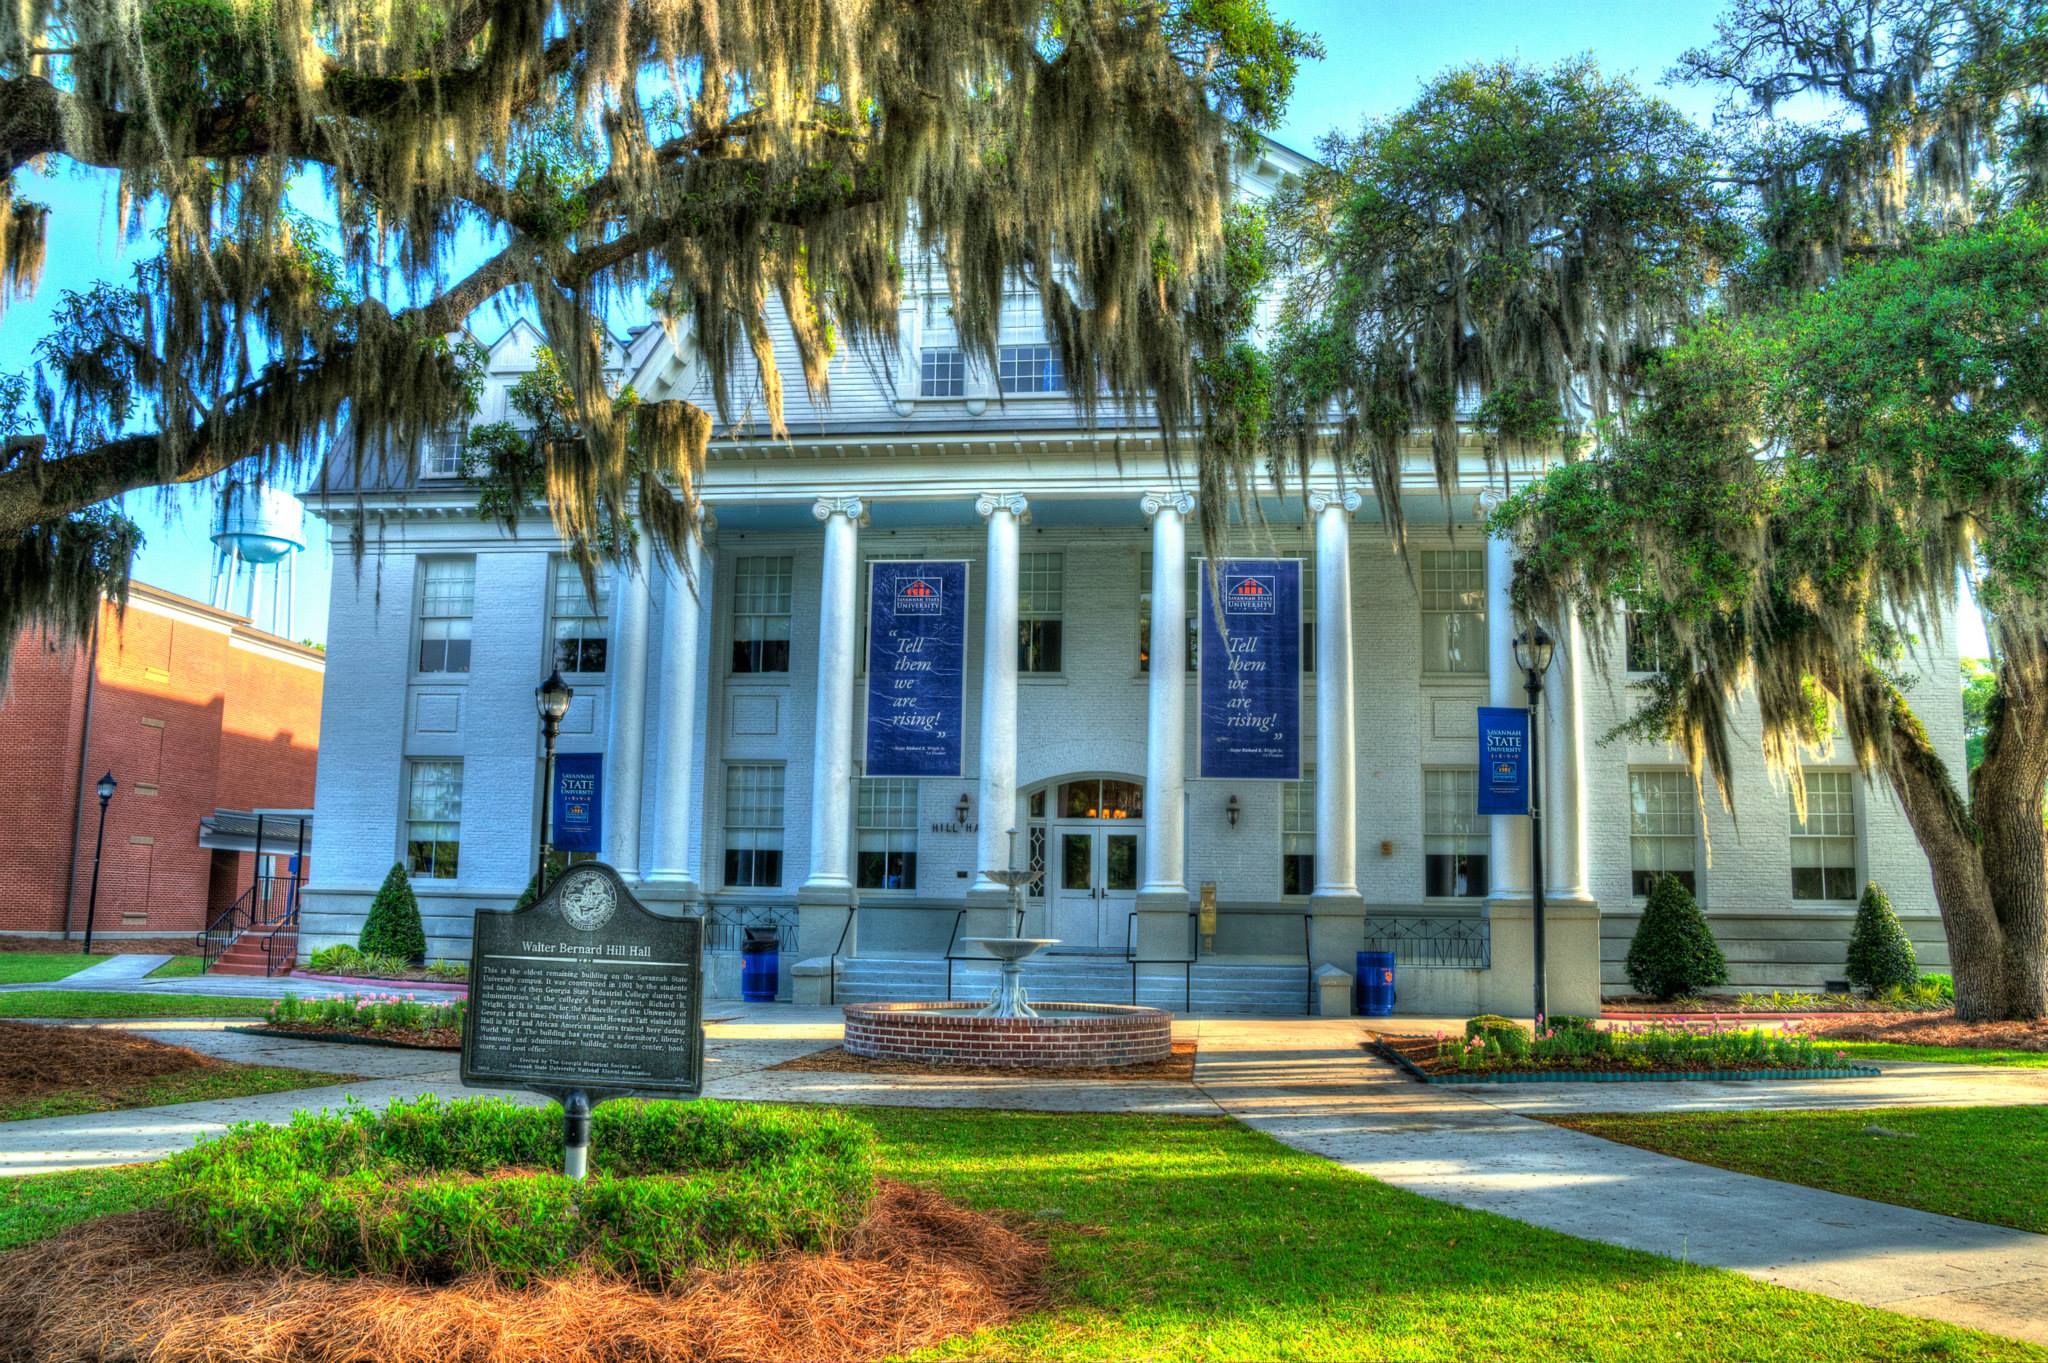 Home - South Georgia State College